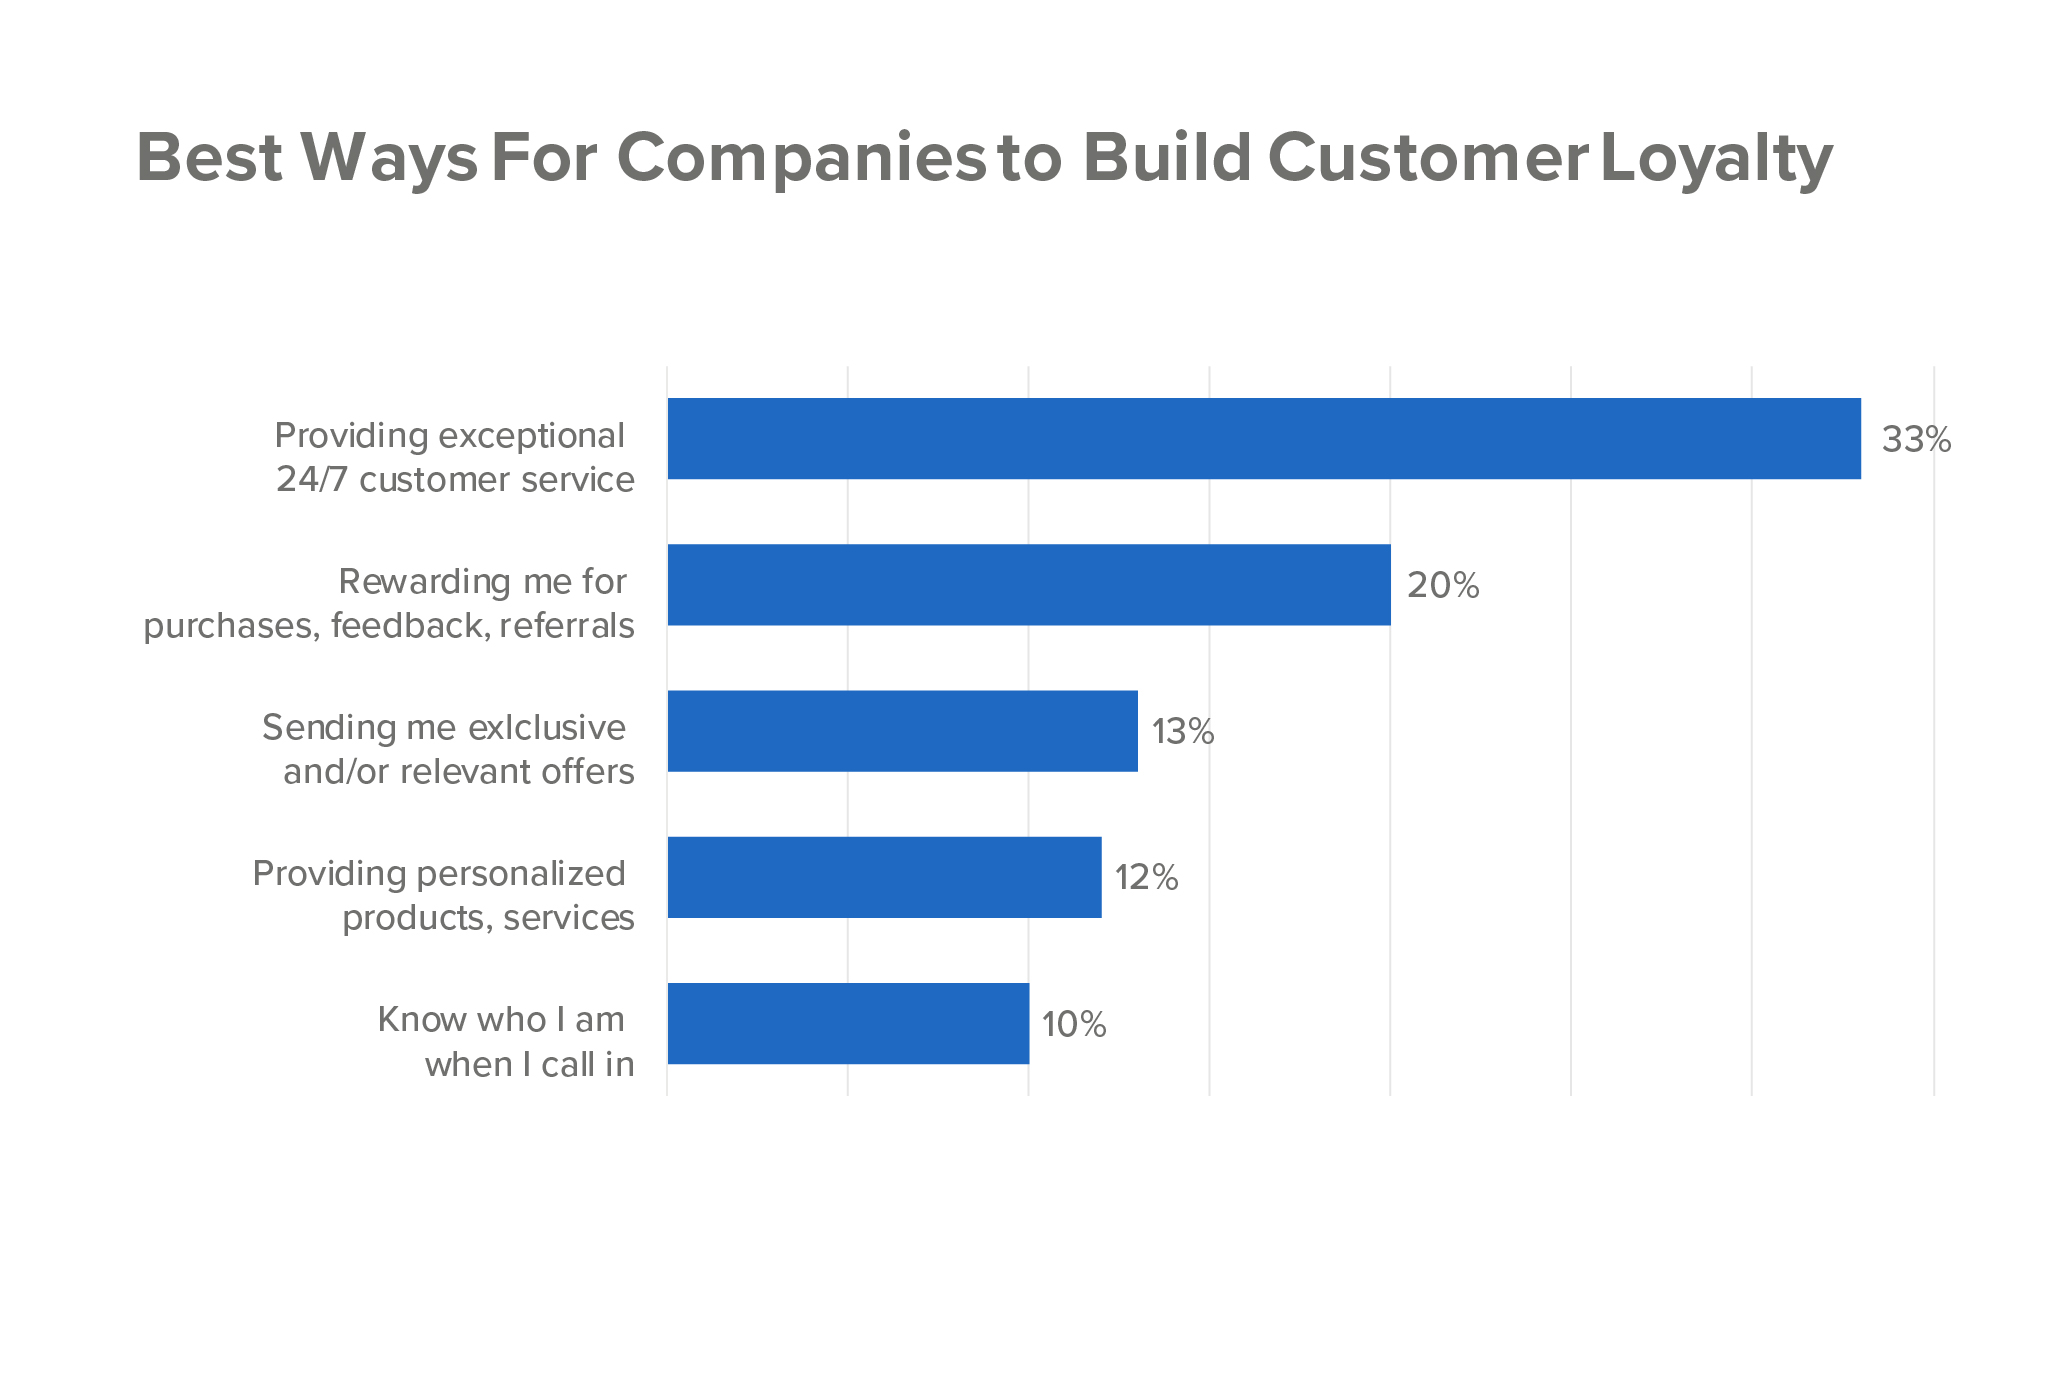 Ways to build customer loyalty